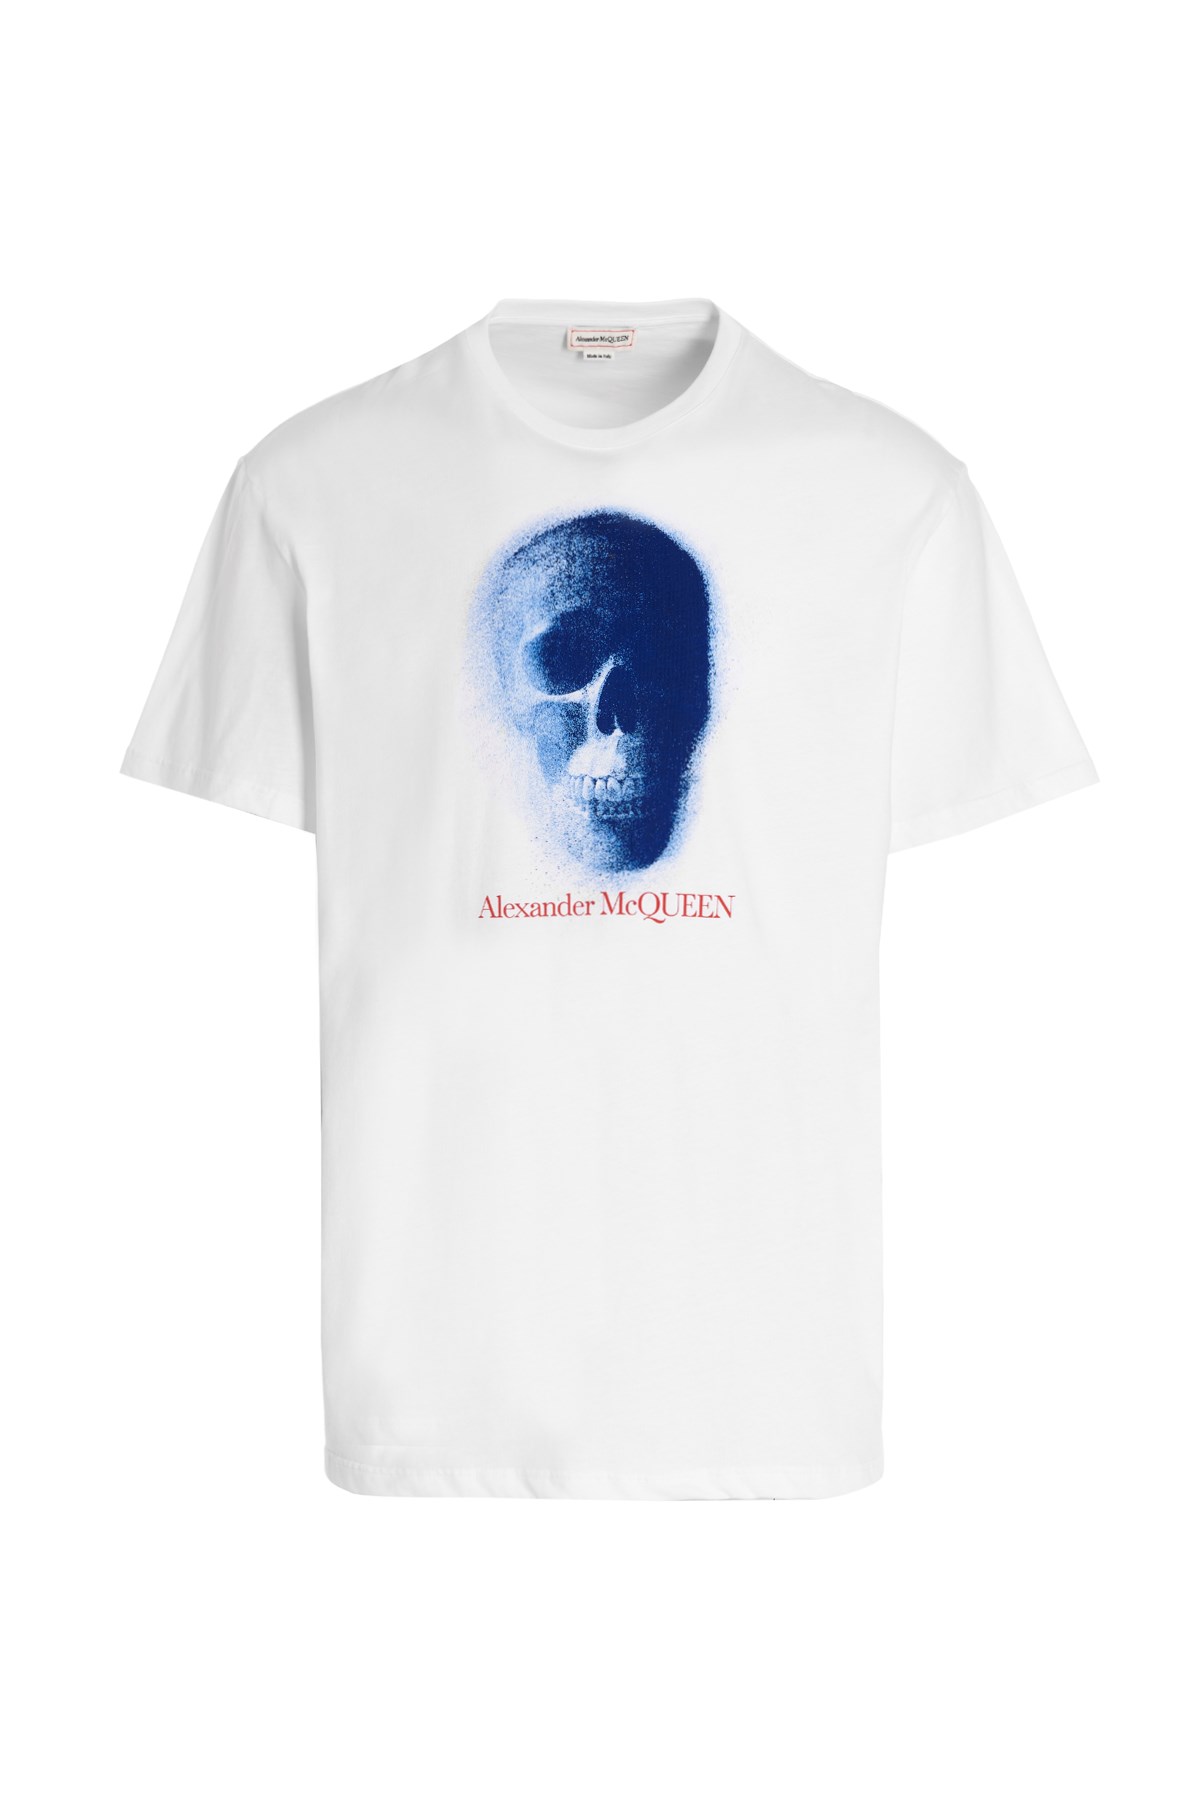 ALEXANDER MCQUEEN T-Shirt Mit Print